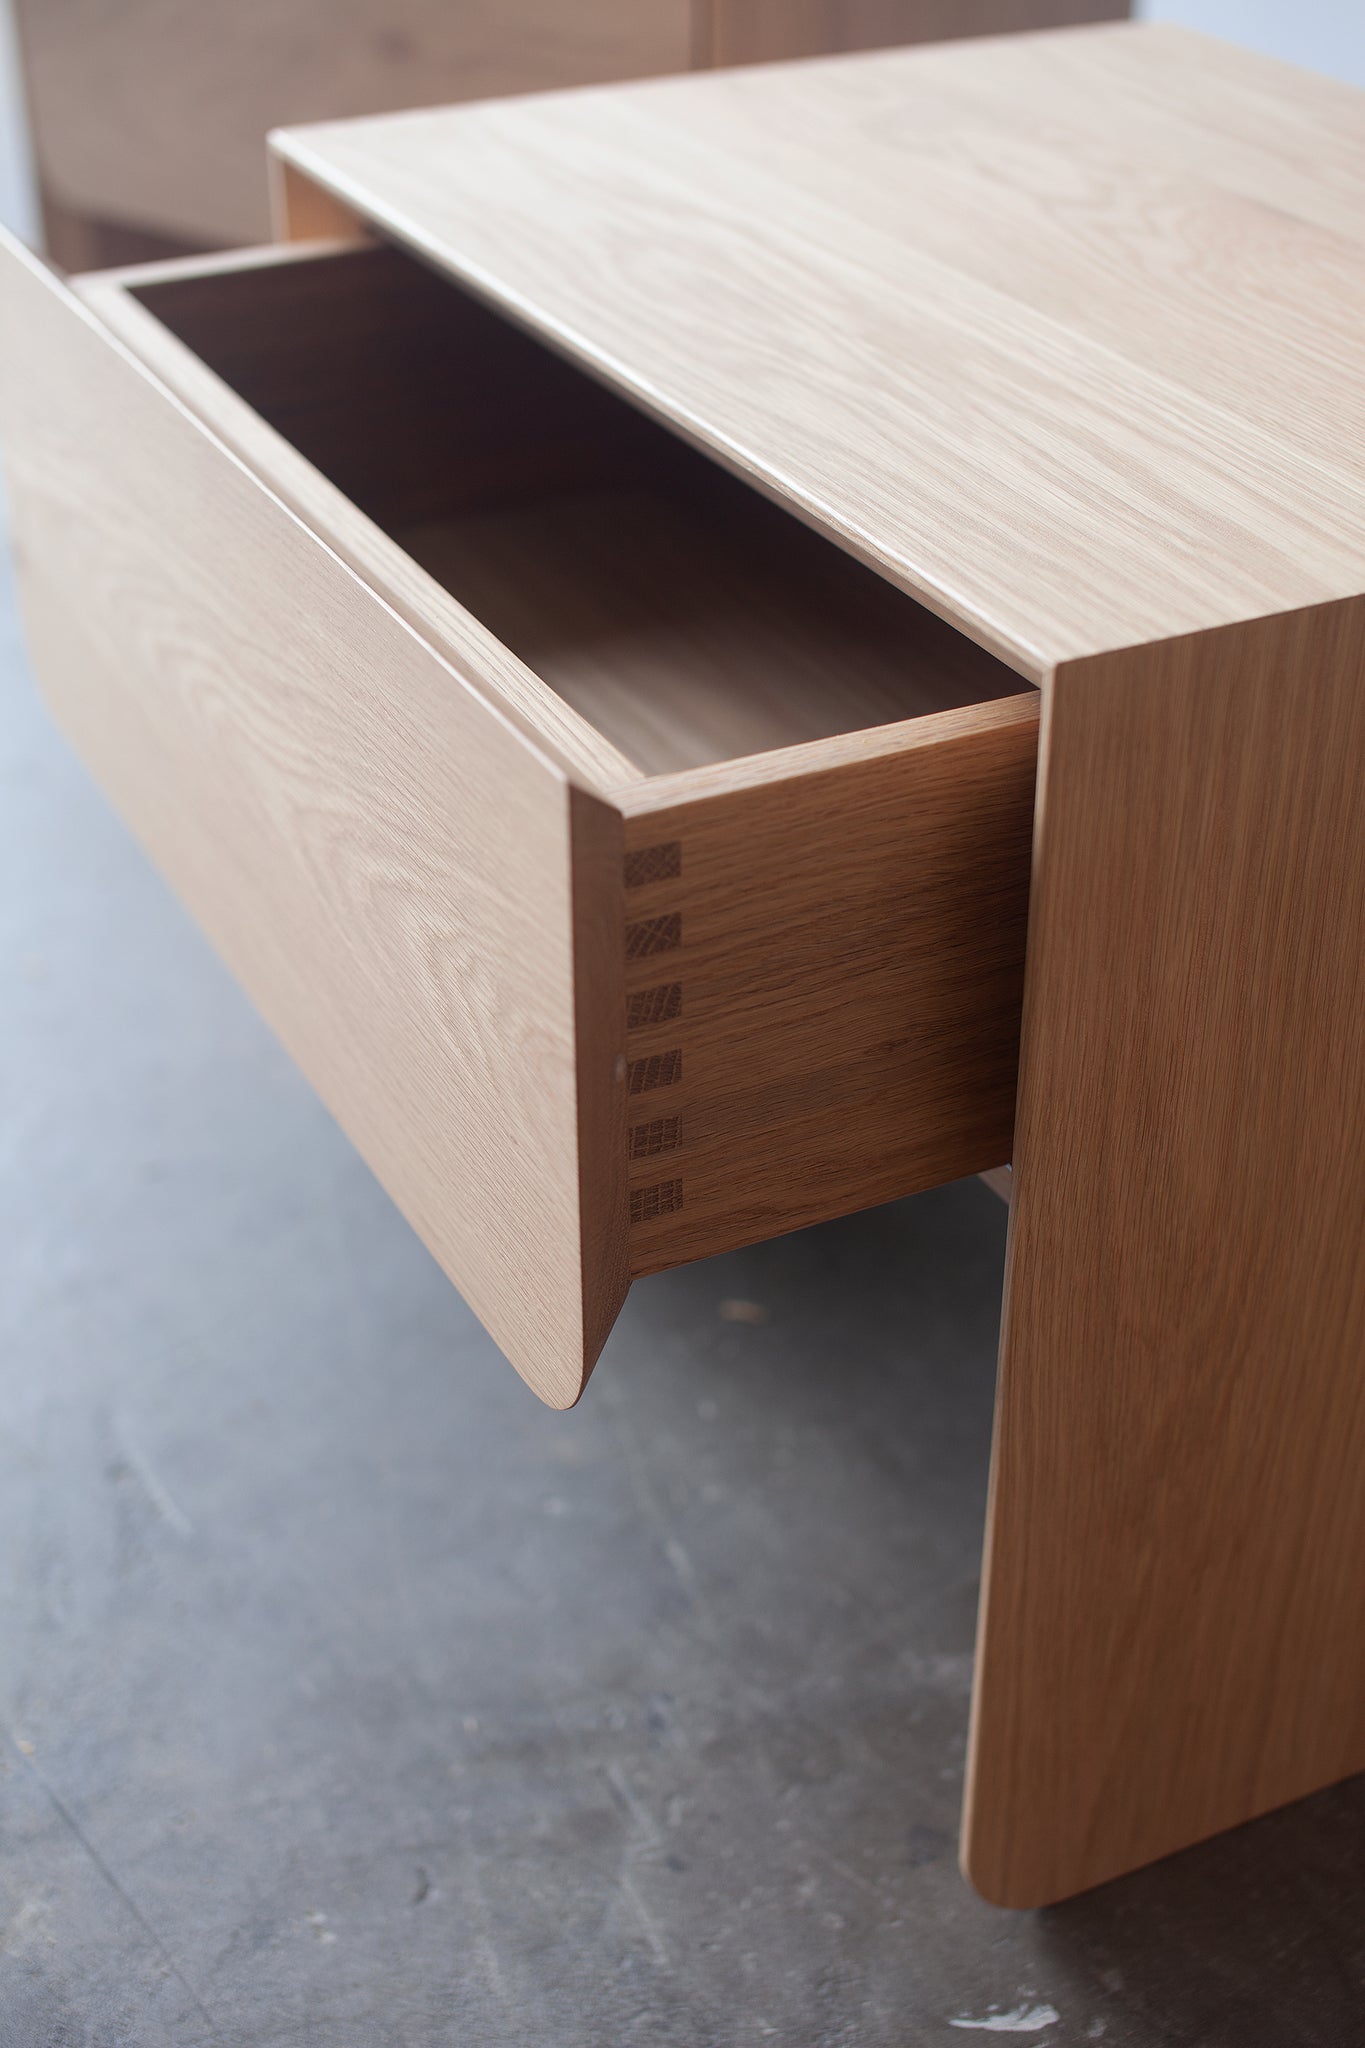 Mast Furniture Tacey bedside table drawer detail